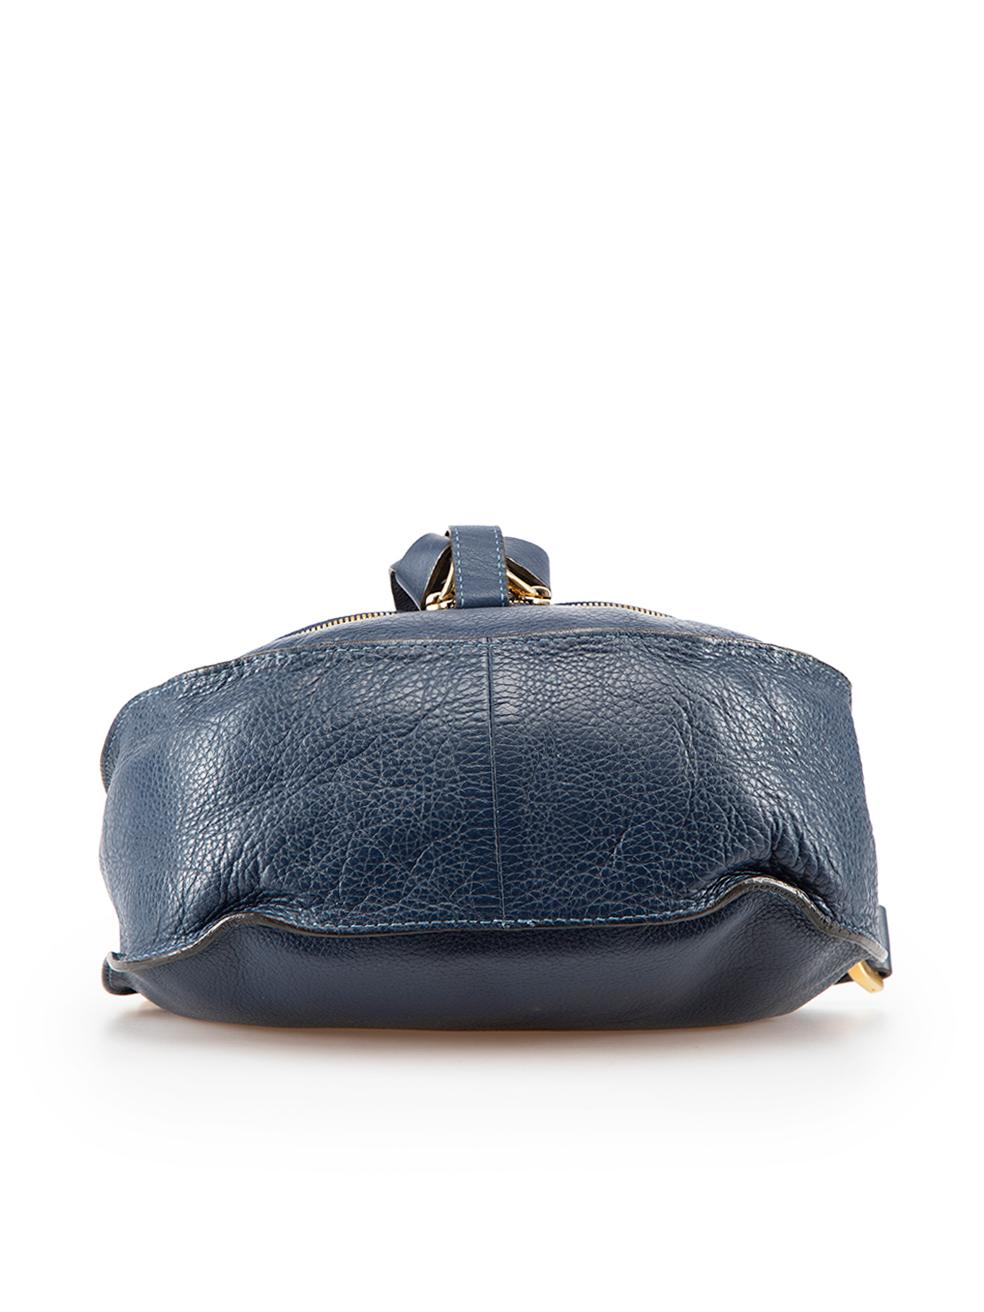 Women's Chloé Navy Leather Medium Marcie Crossbody Bag